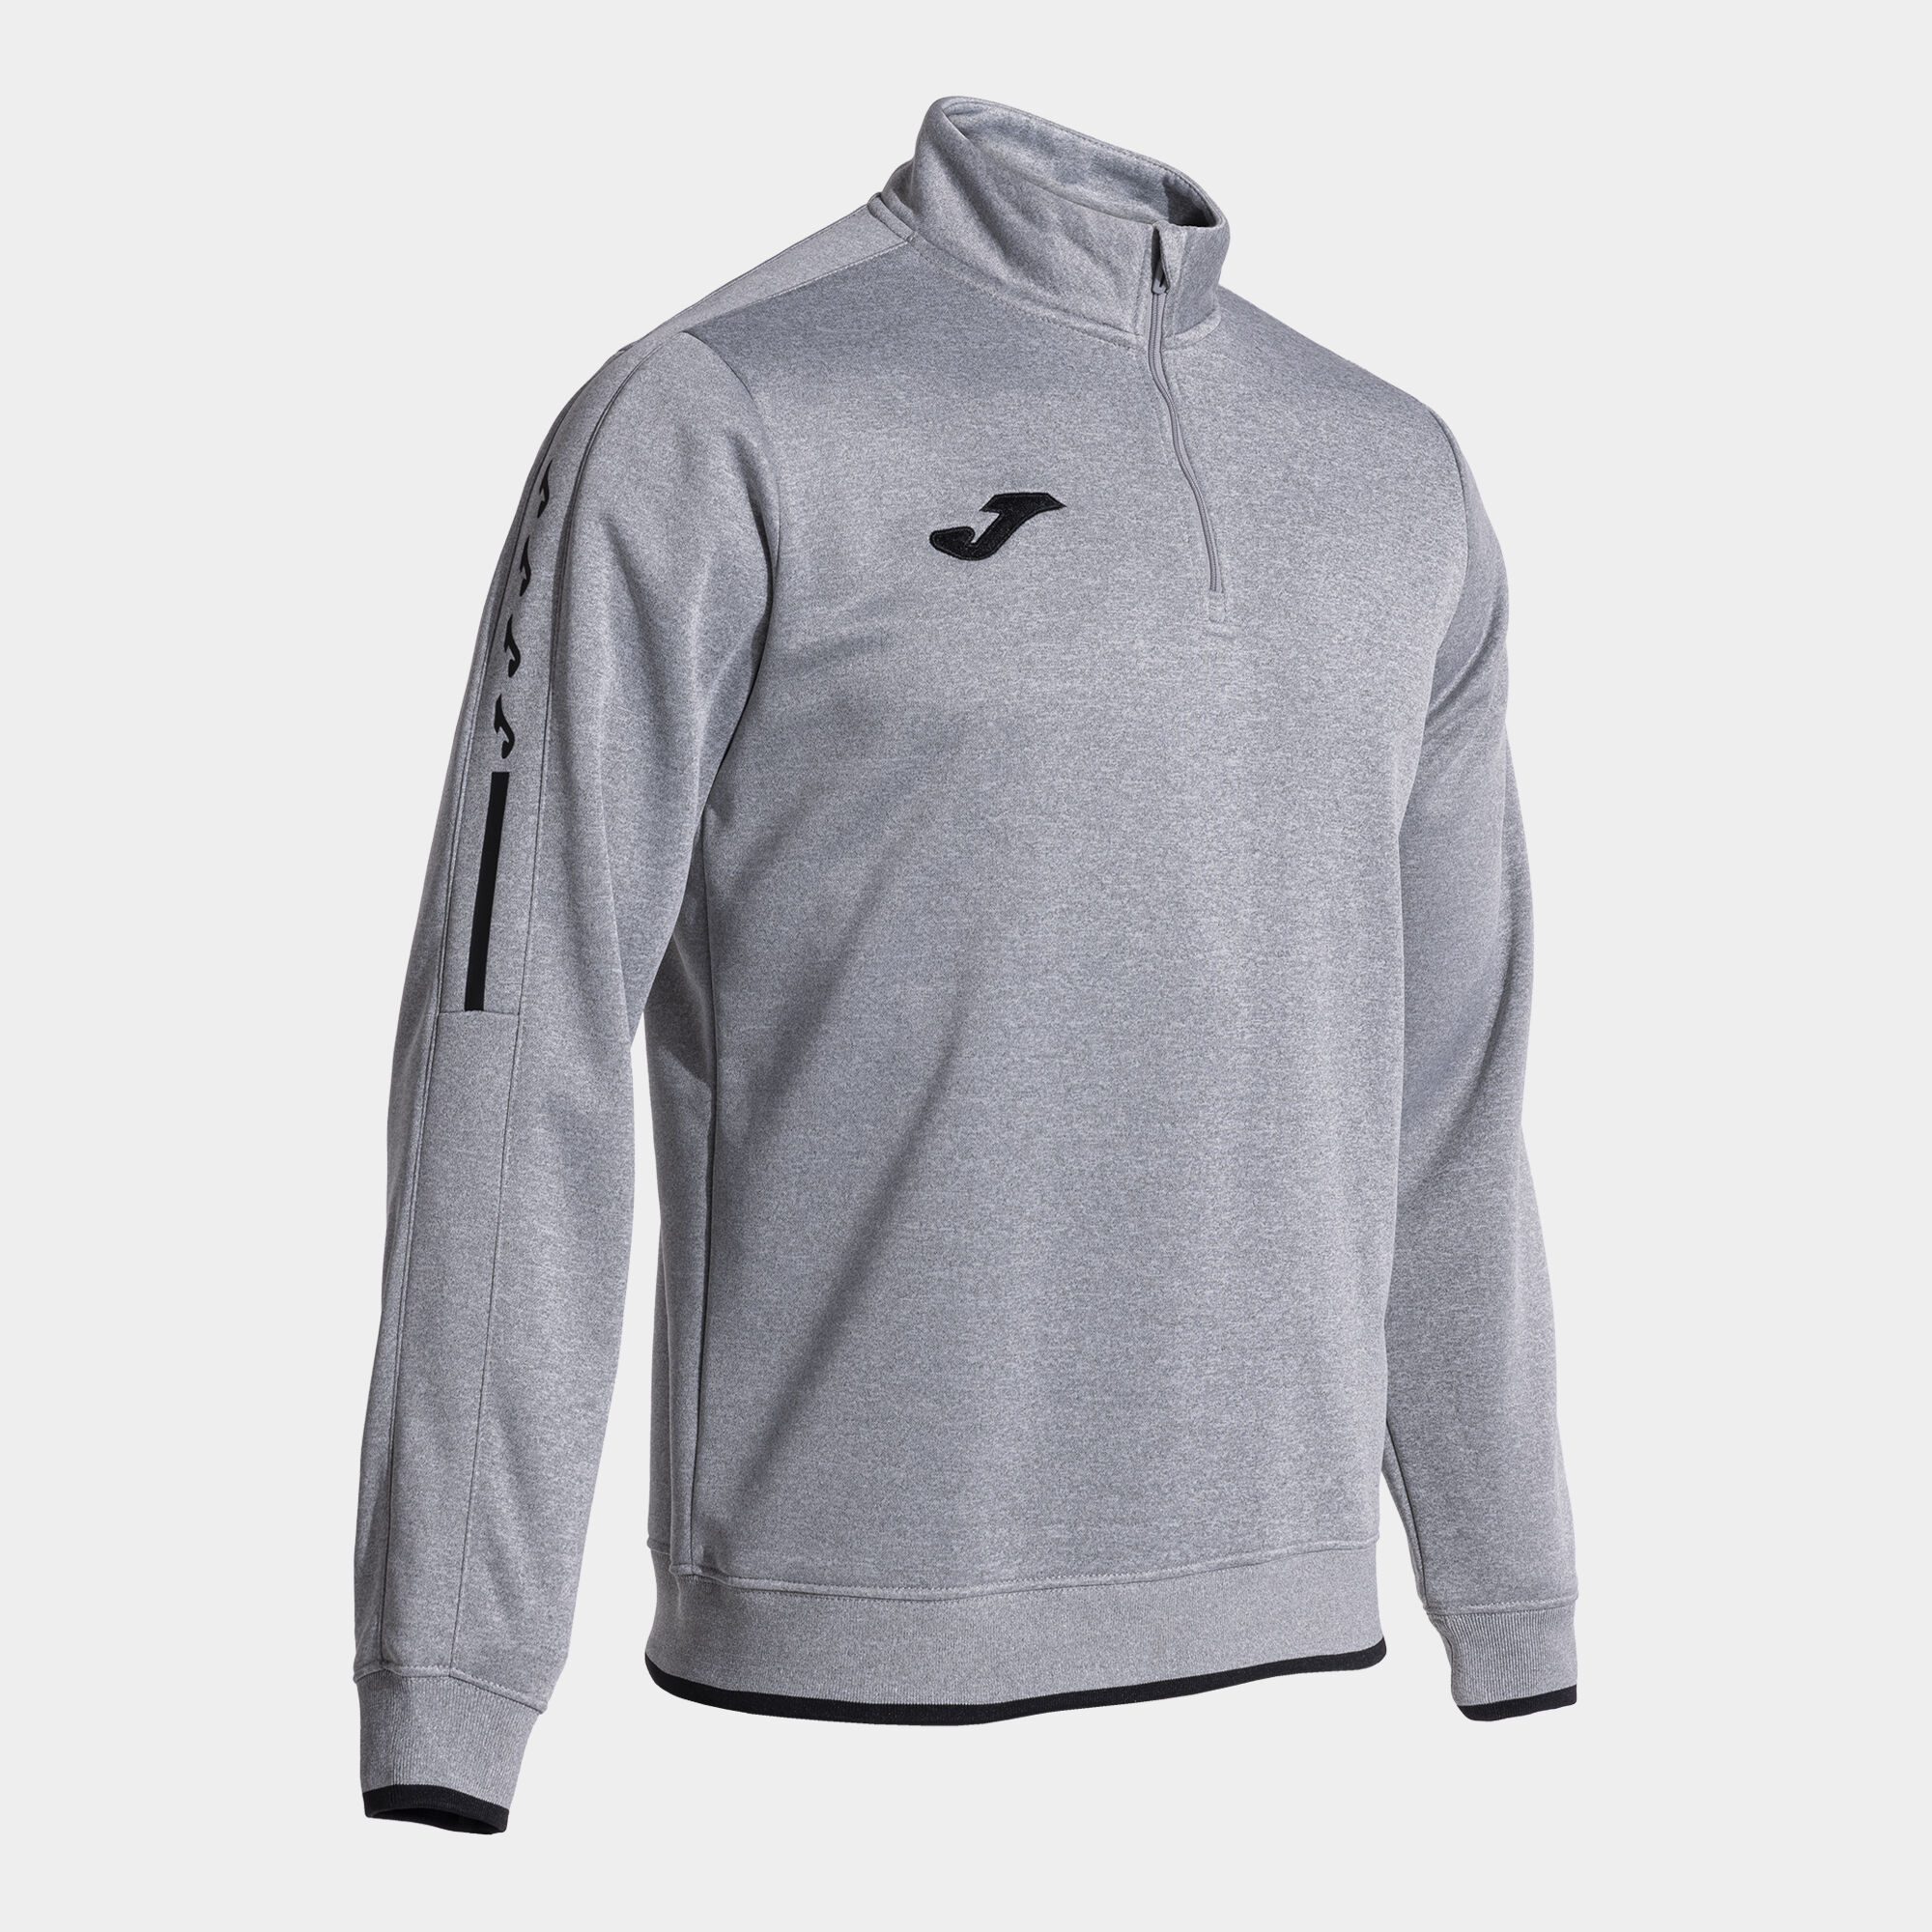 Sweatshirt man Olimpiada melange gray black